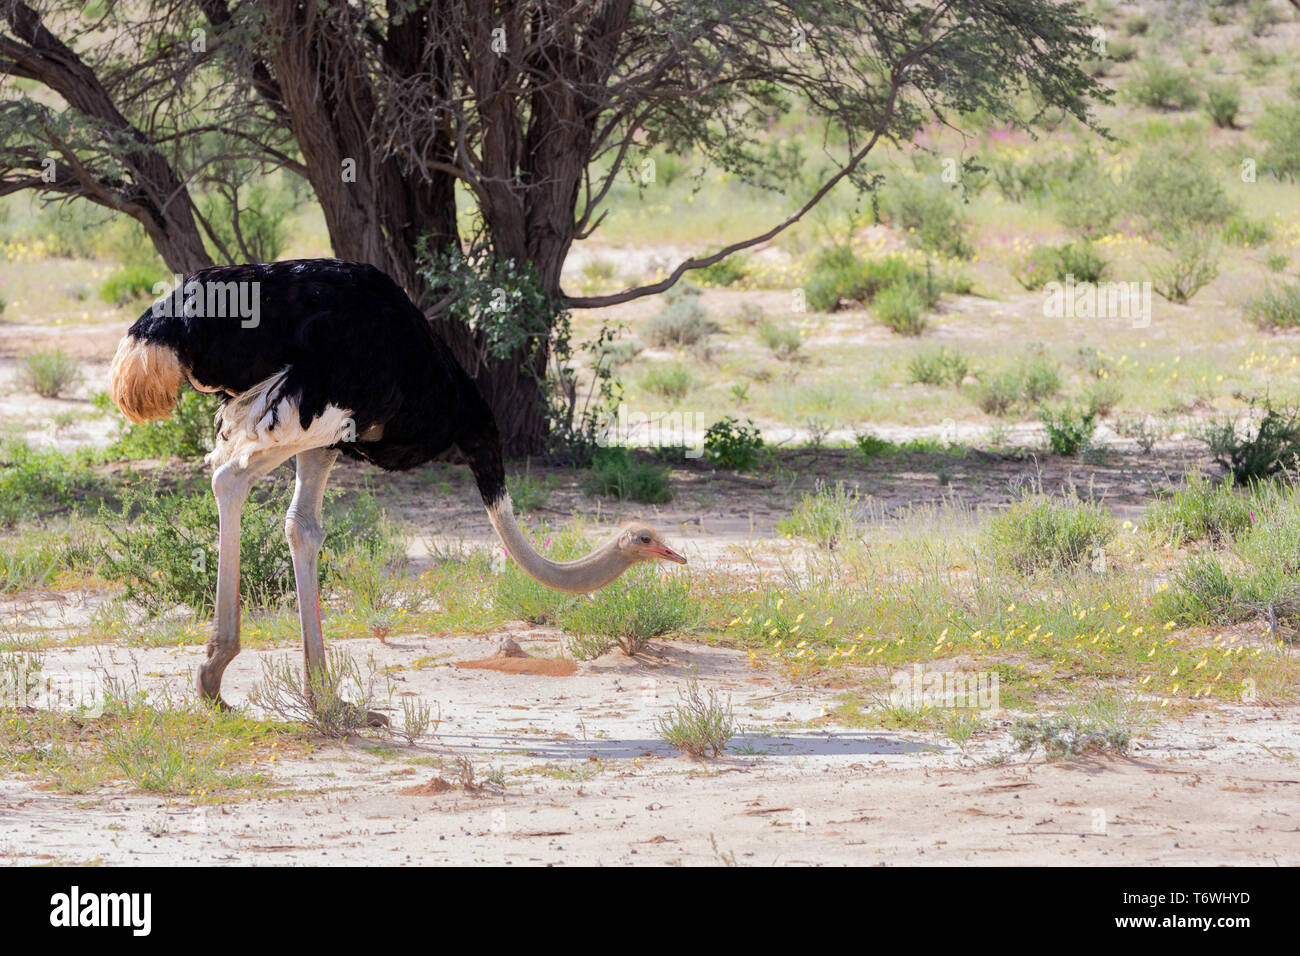 Ostrich, in Kalahari,South Africa wildlife safari Stock Photo